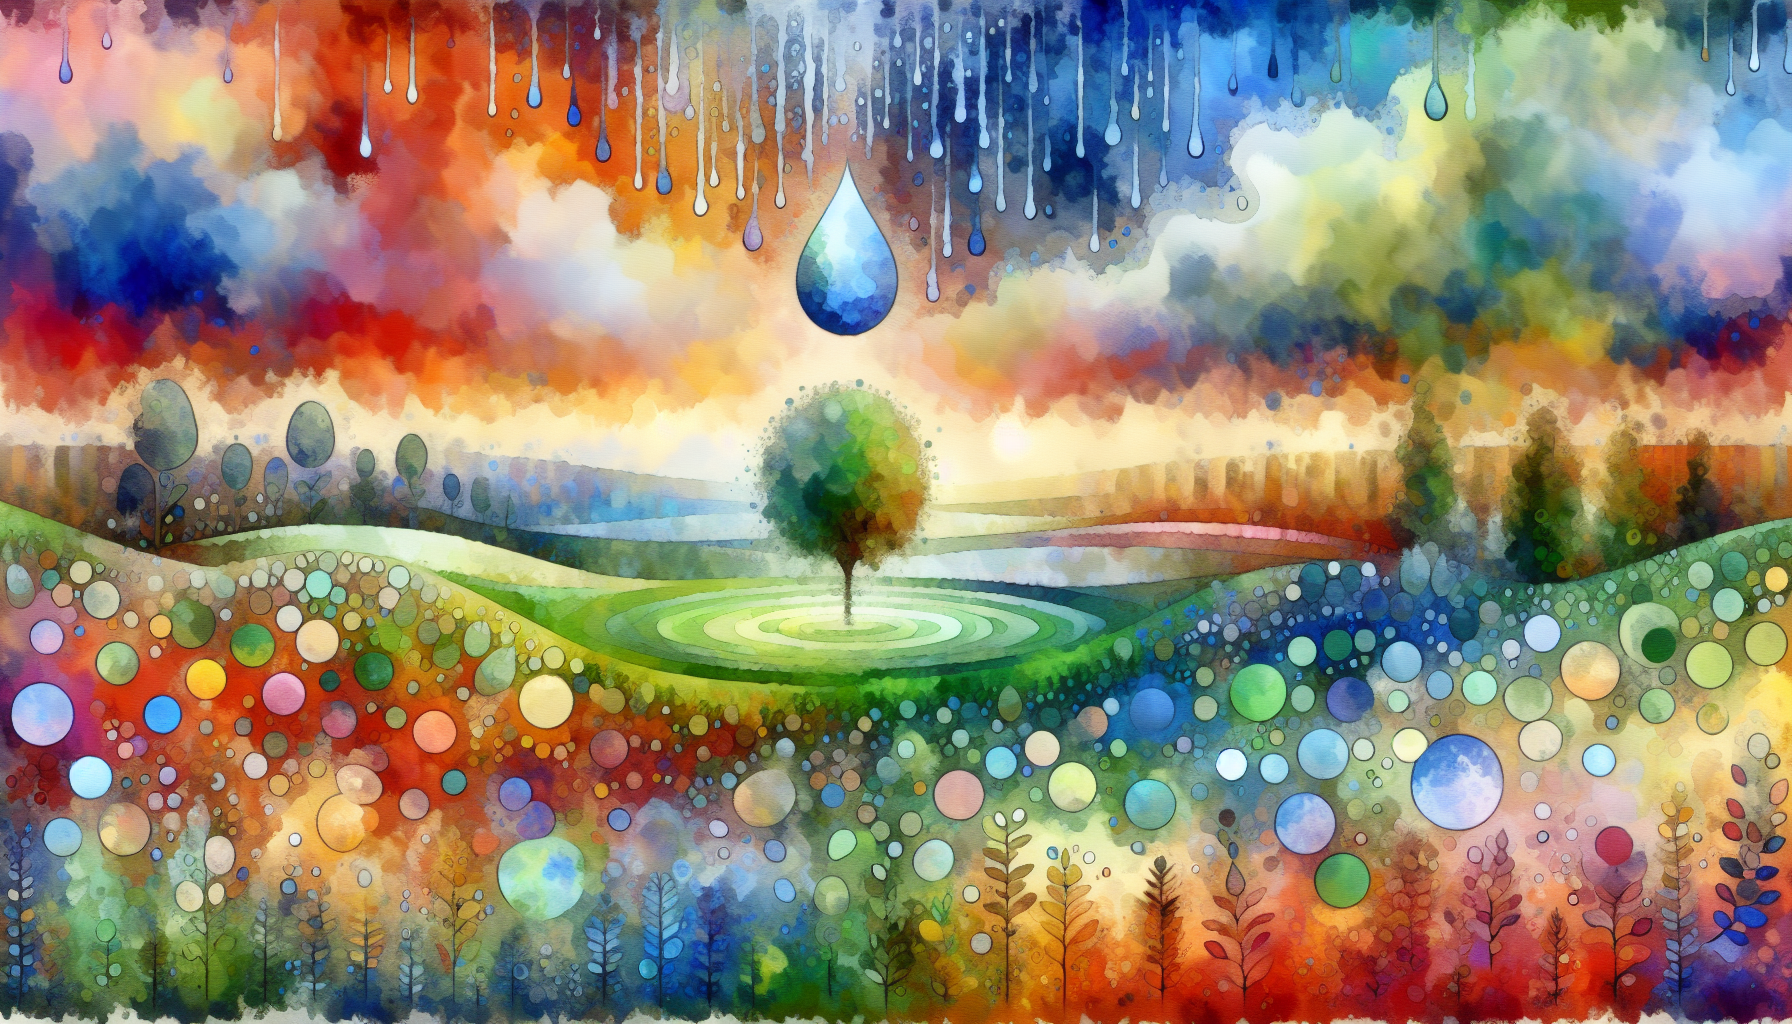 The Appreciative Raindrop Nourishing Earth with Thanks